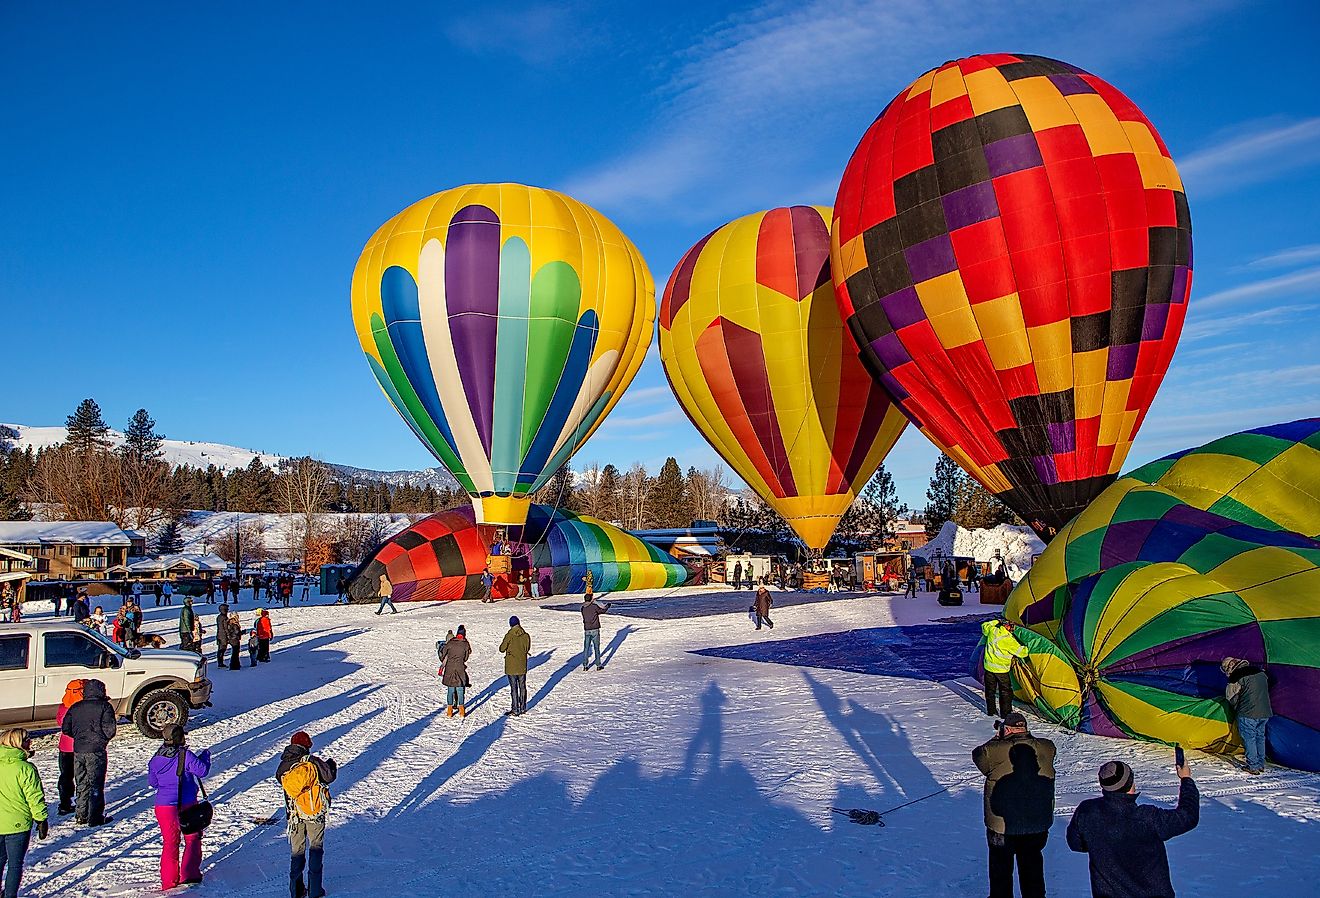 Hot air balloon festival in Winthrop, Washington. Image credit oksana.perkins via Shutterstock